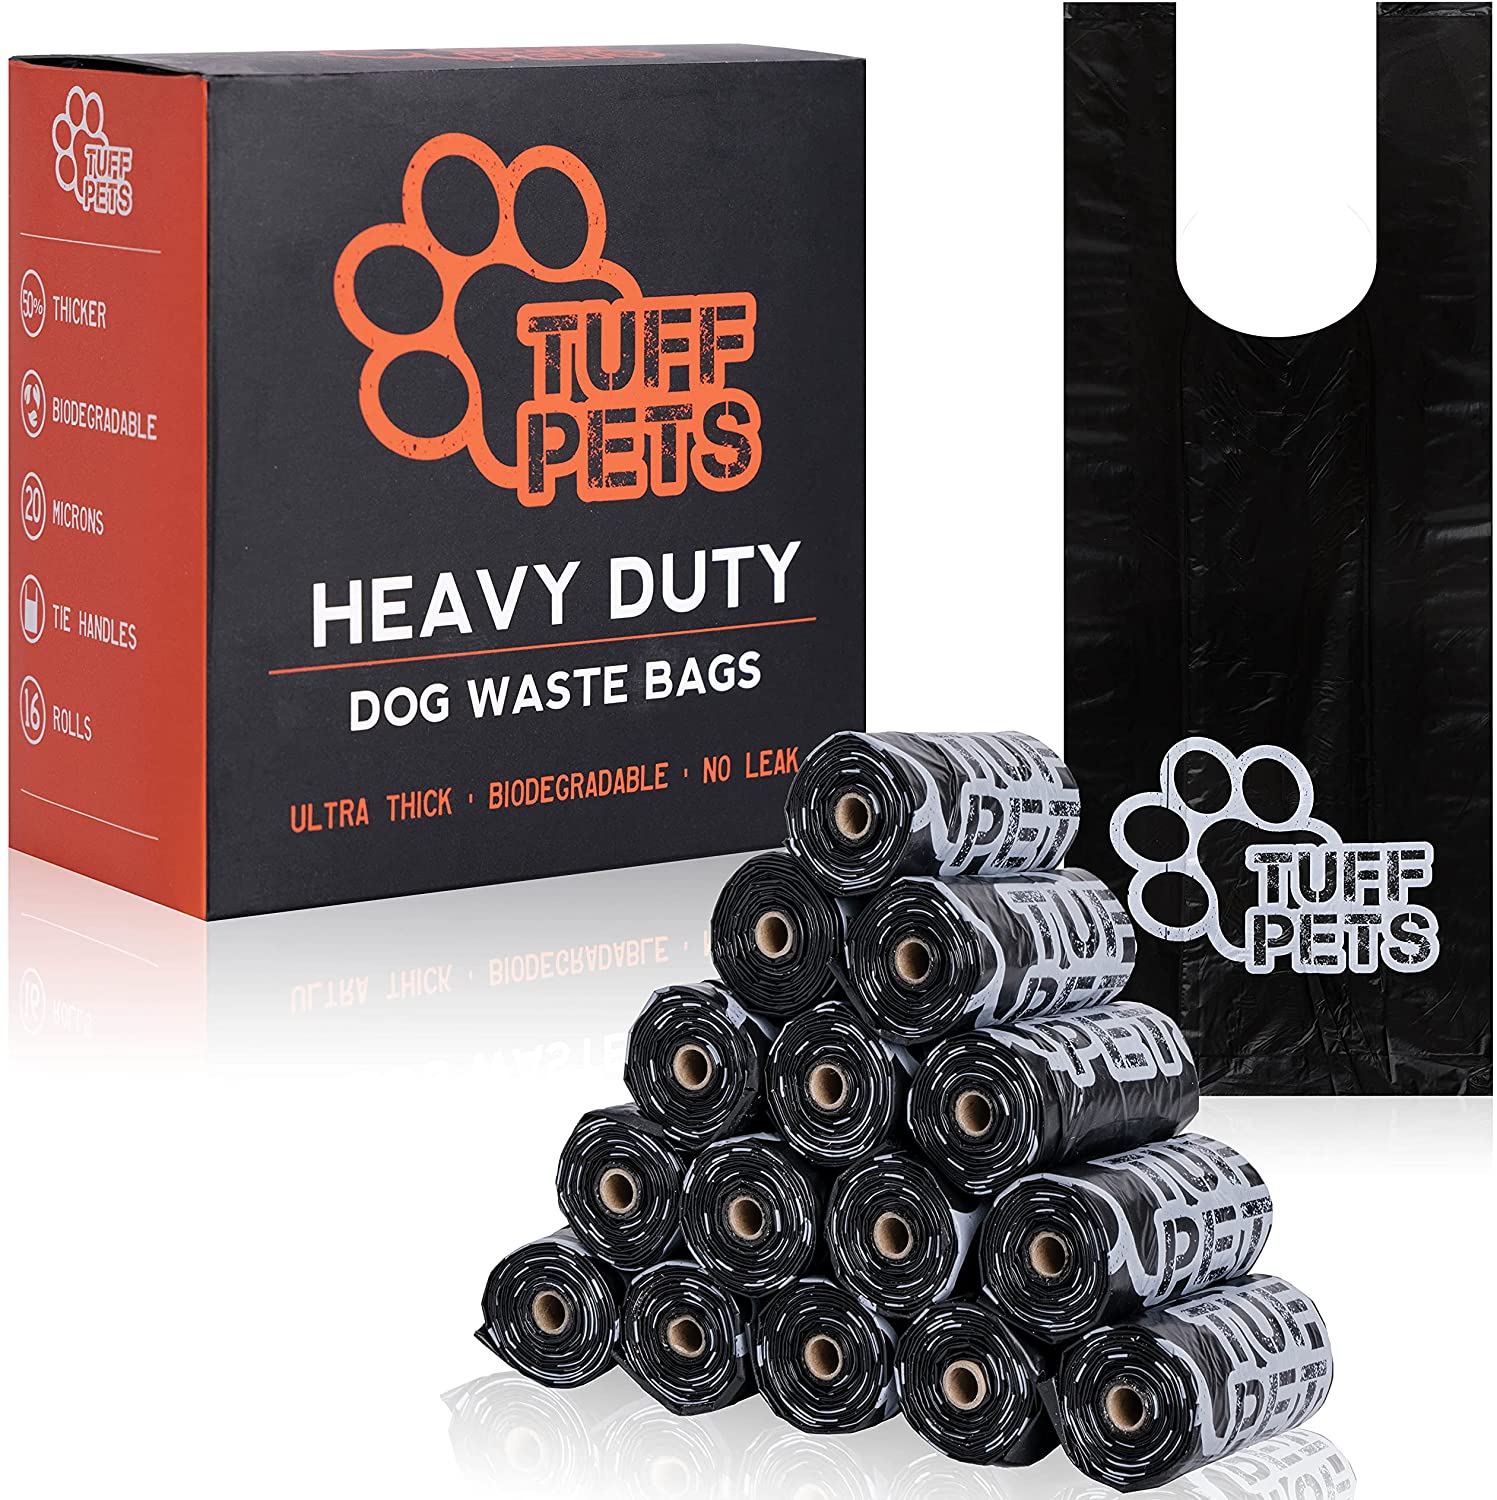 Tuff Pets Dog Waste Bags